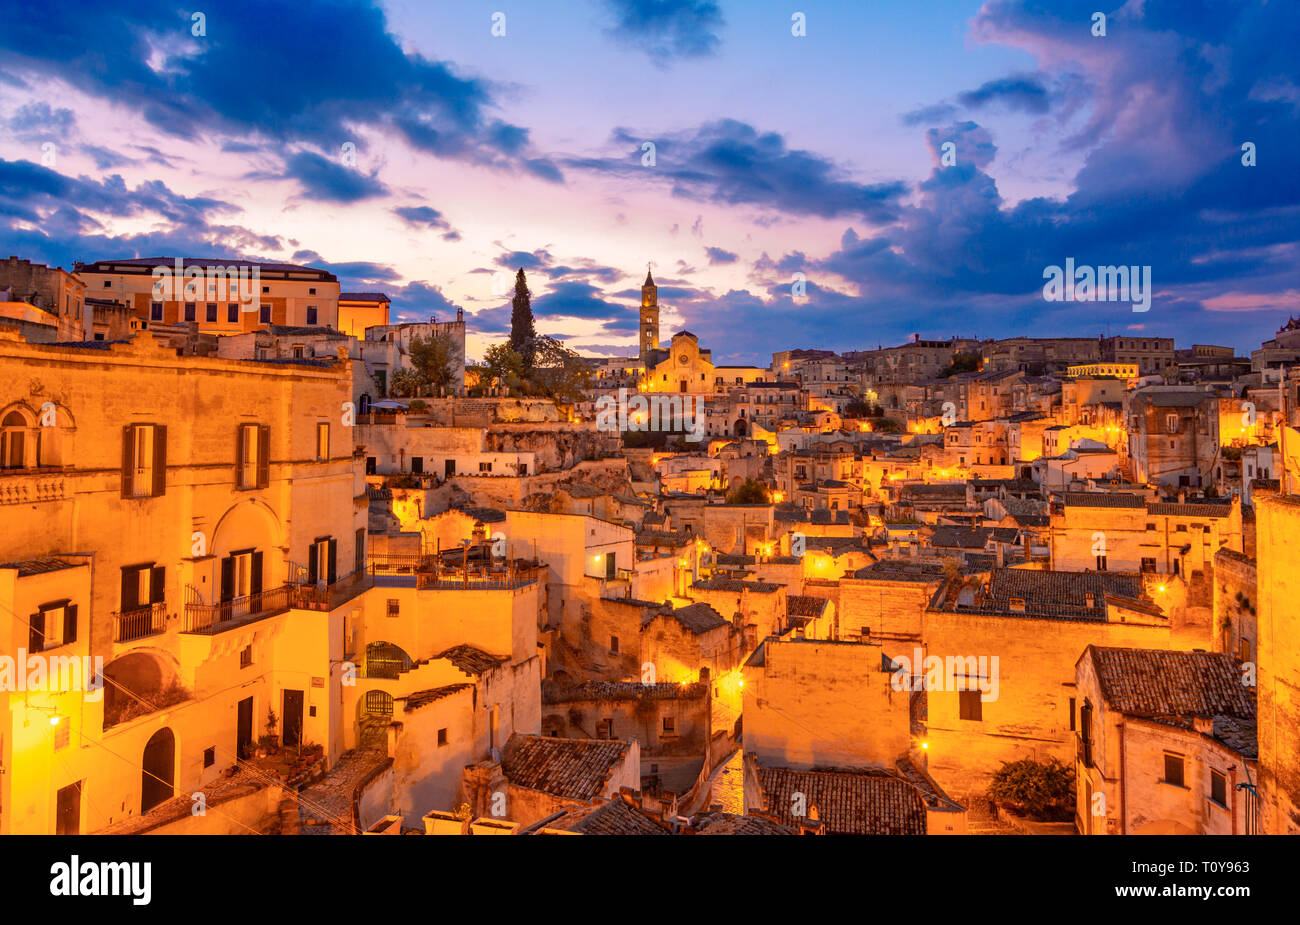 Matera, Basilicata, Italy: Night view of the old town - Sassi di Matera, European Capital of Culture, at dawn Stock Photo